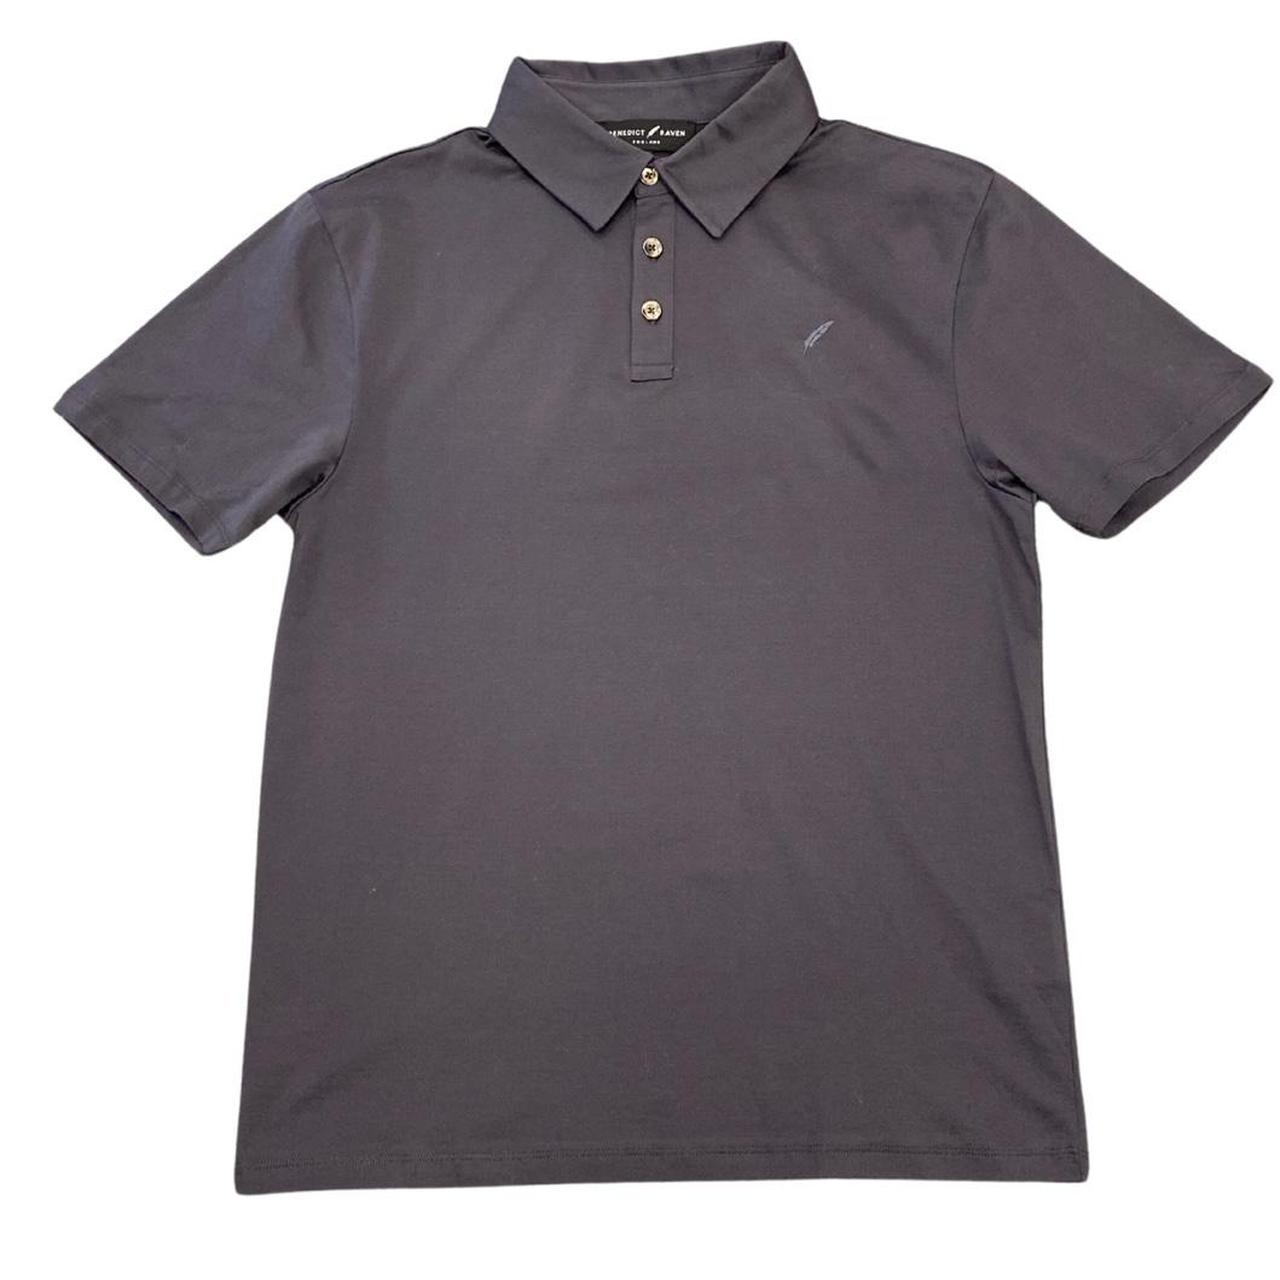 Benedict Raven Charcoal Grey Polo shirt Size... - Depop